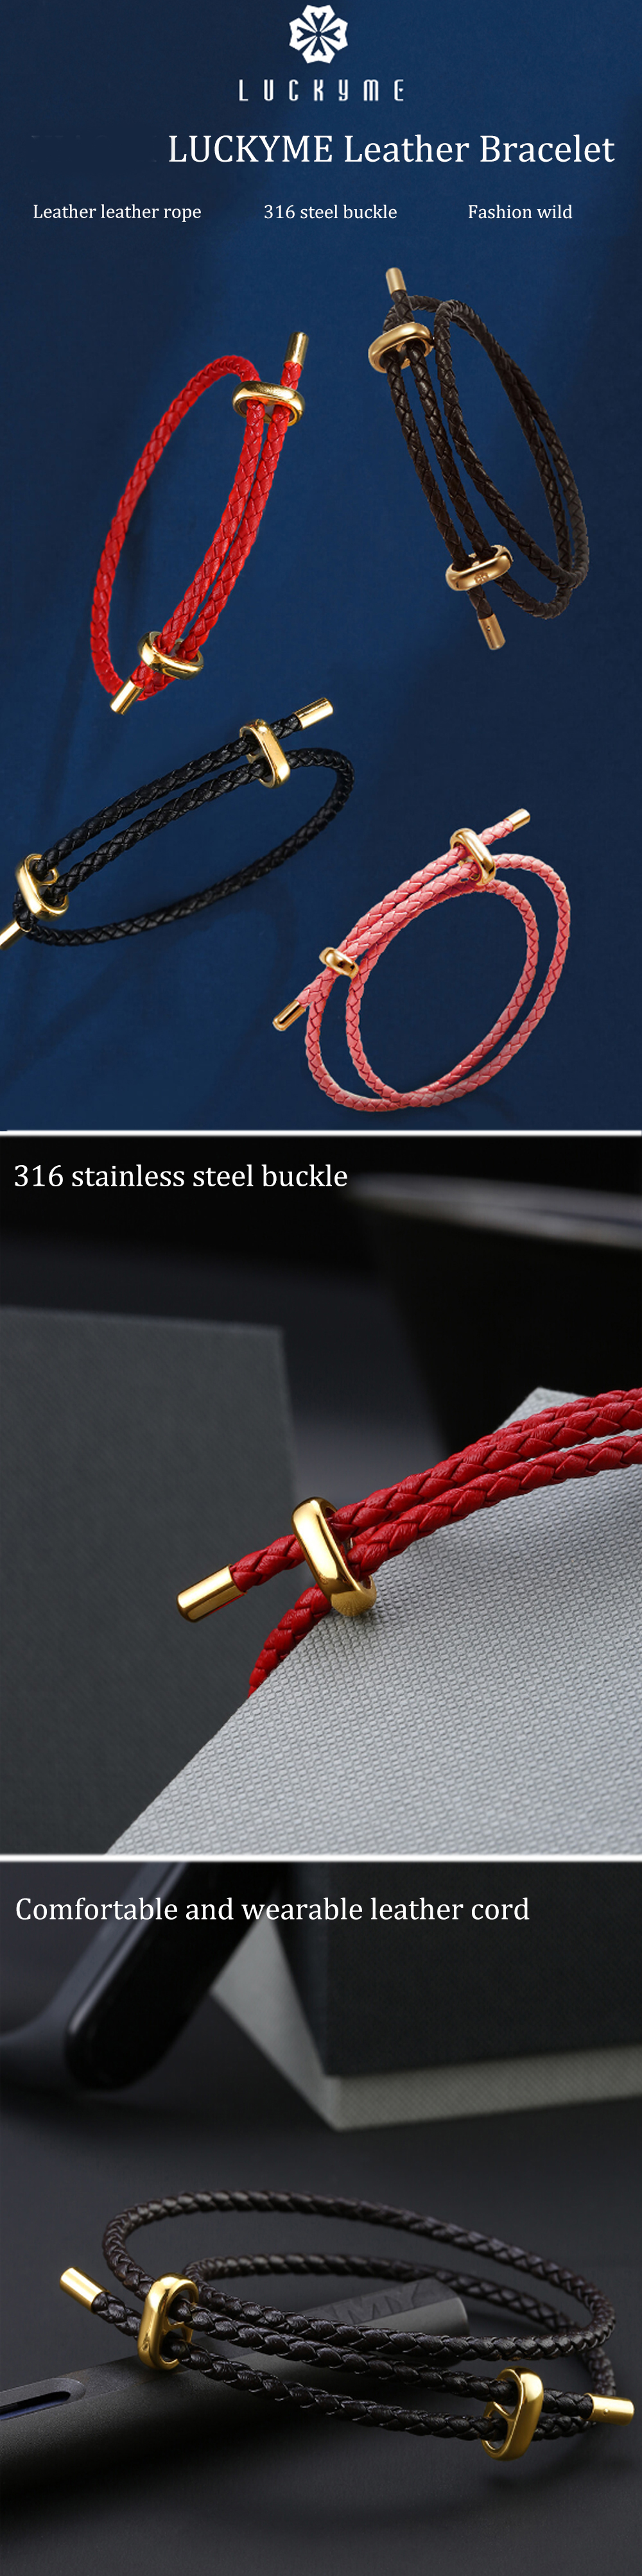 LUCKYME-2544cm-Genuine-Leather-Bracelet-316-Steel-Buckle-Hand-Strap-Wristband-for-Men-Women-1359369-1